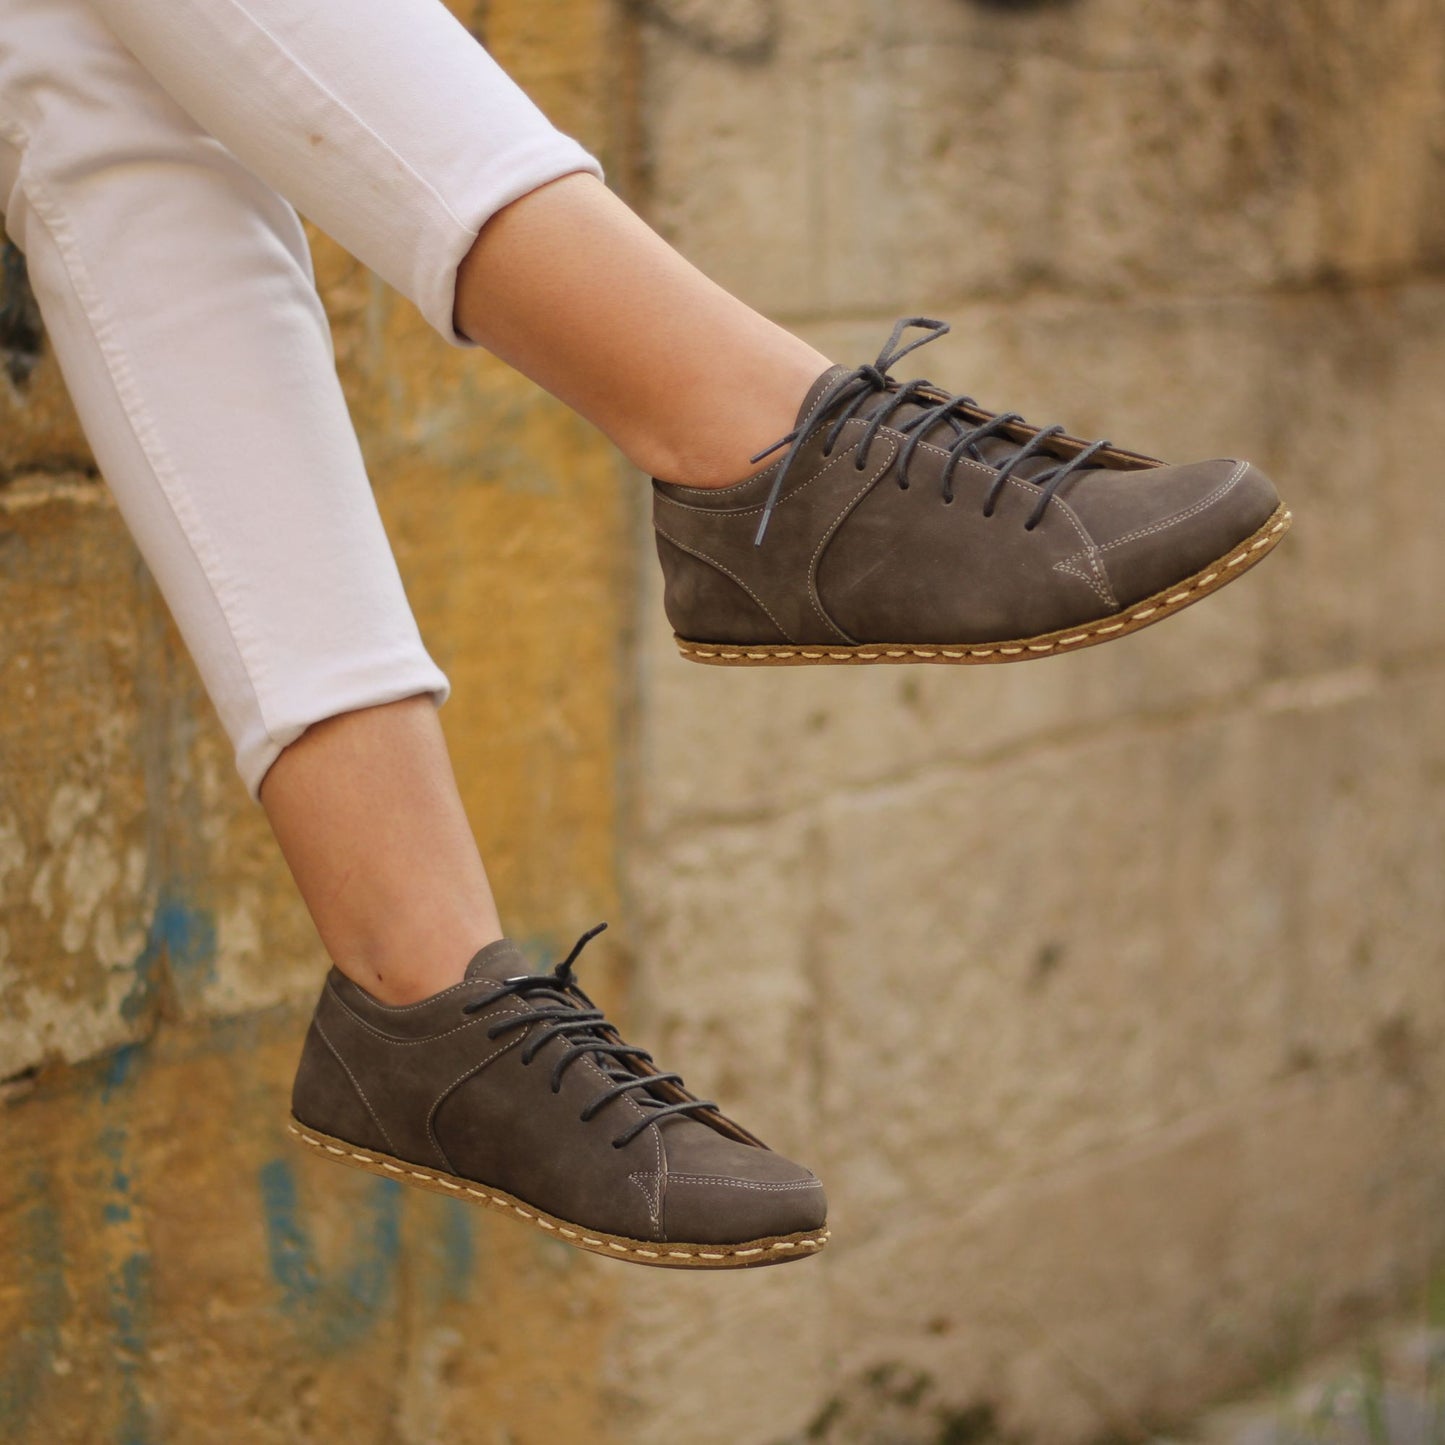 Gray Nubuck Leather Barefoot Sneakers for Women - Handmade, Rare Buffalo Leather